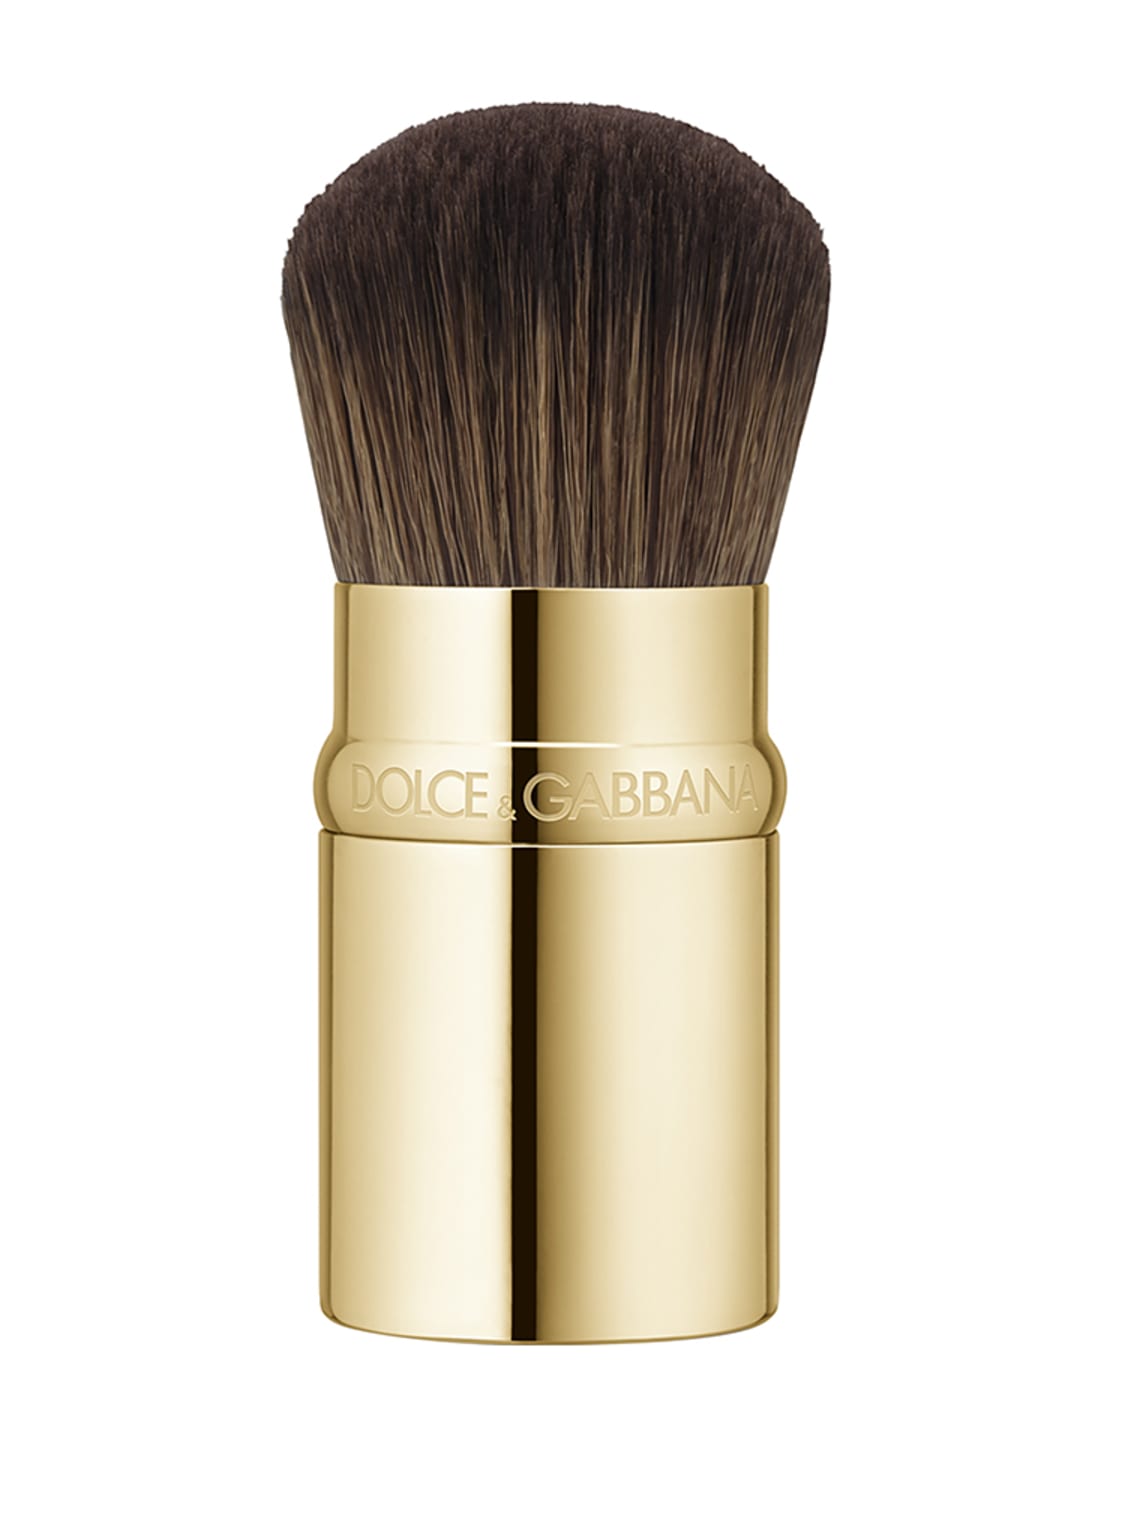 Image of Dolce & Gabbana Beauty Brush Retractable Kabuki Puderpinsel